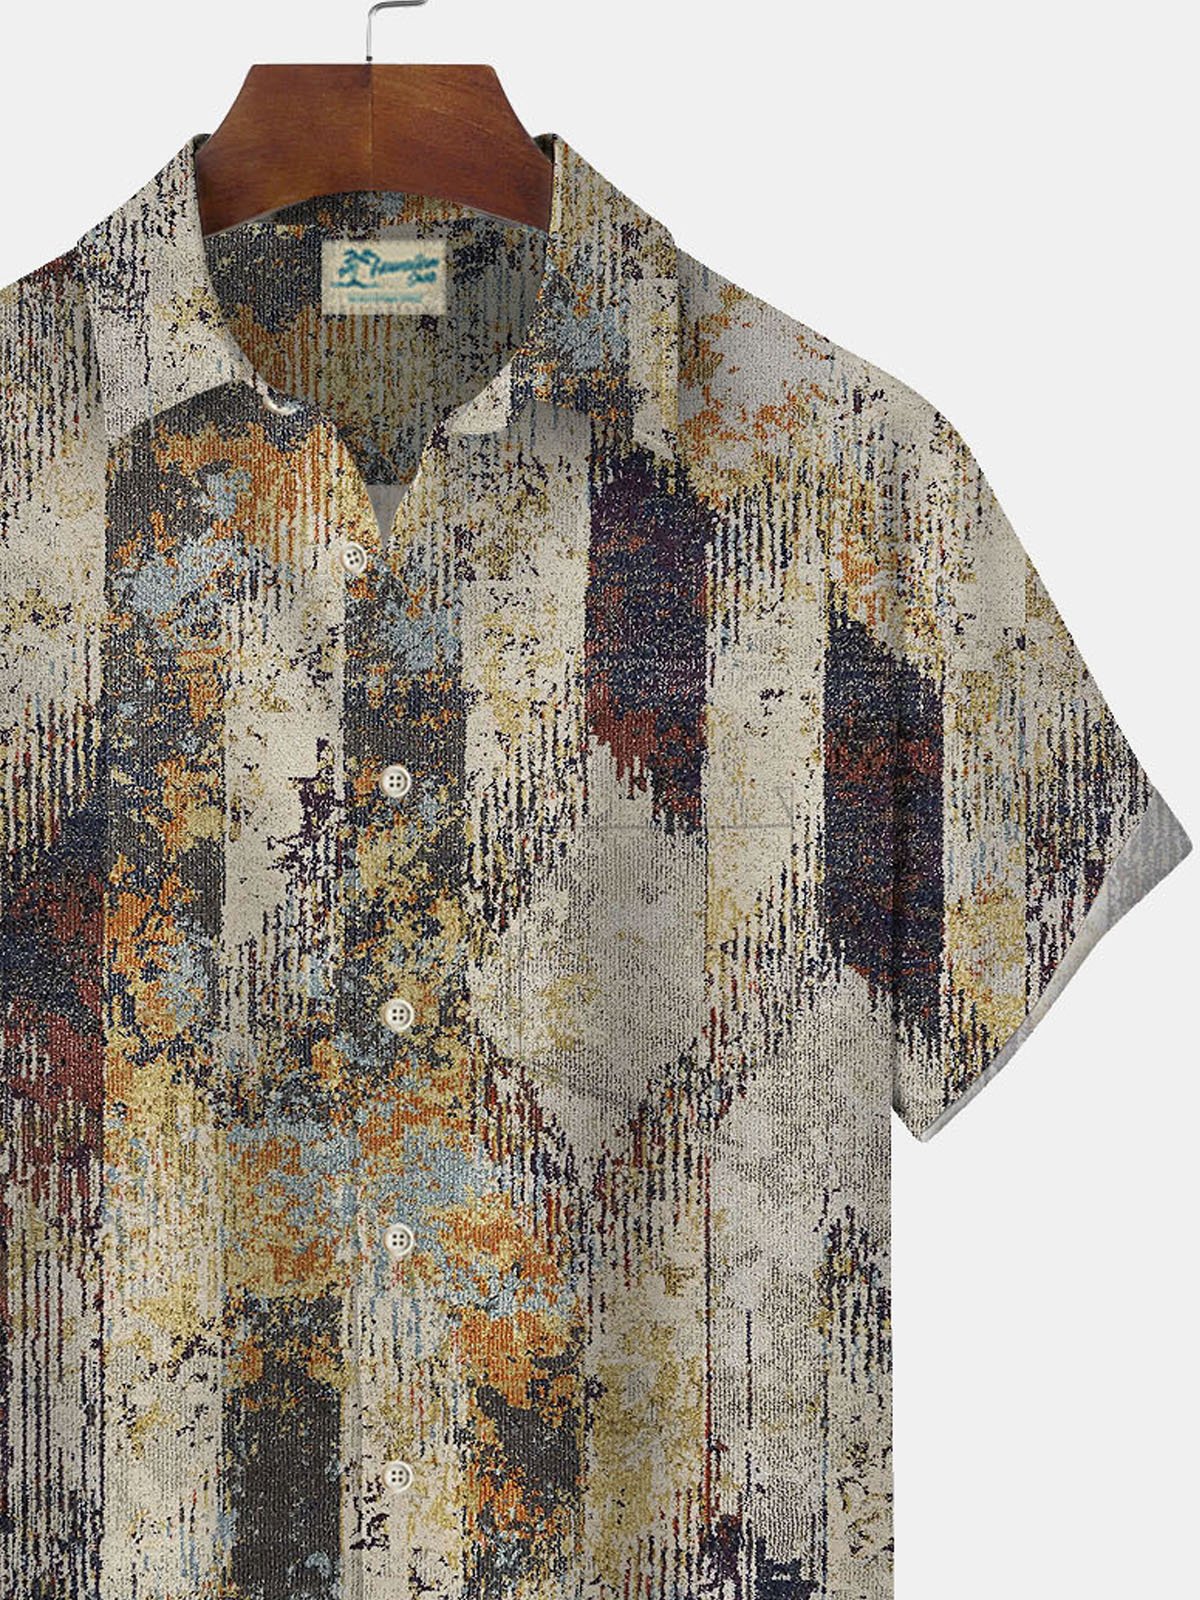 Royaura Vintage Texture Gradient Print Men's Button Pocket Shirt